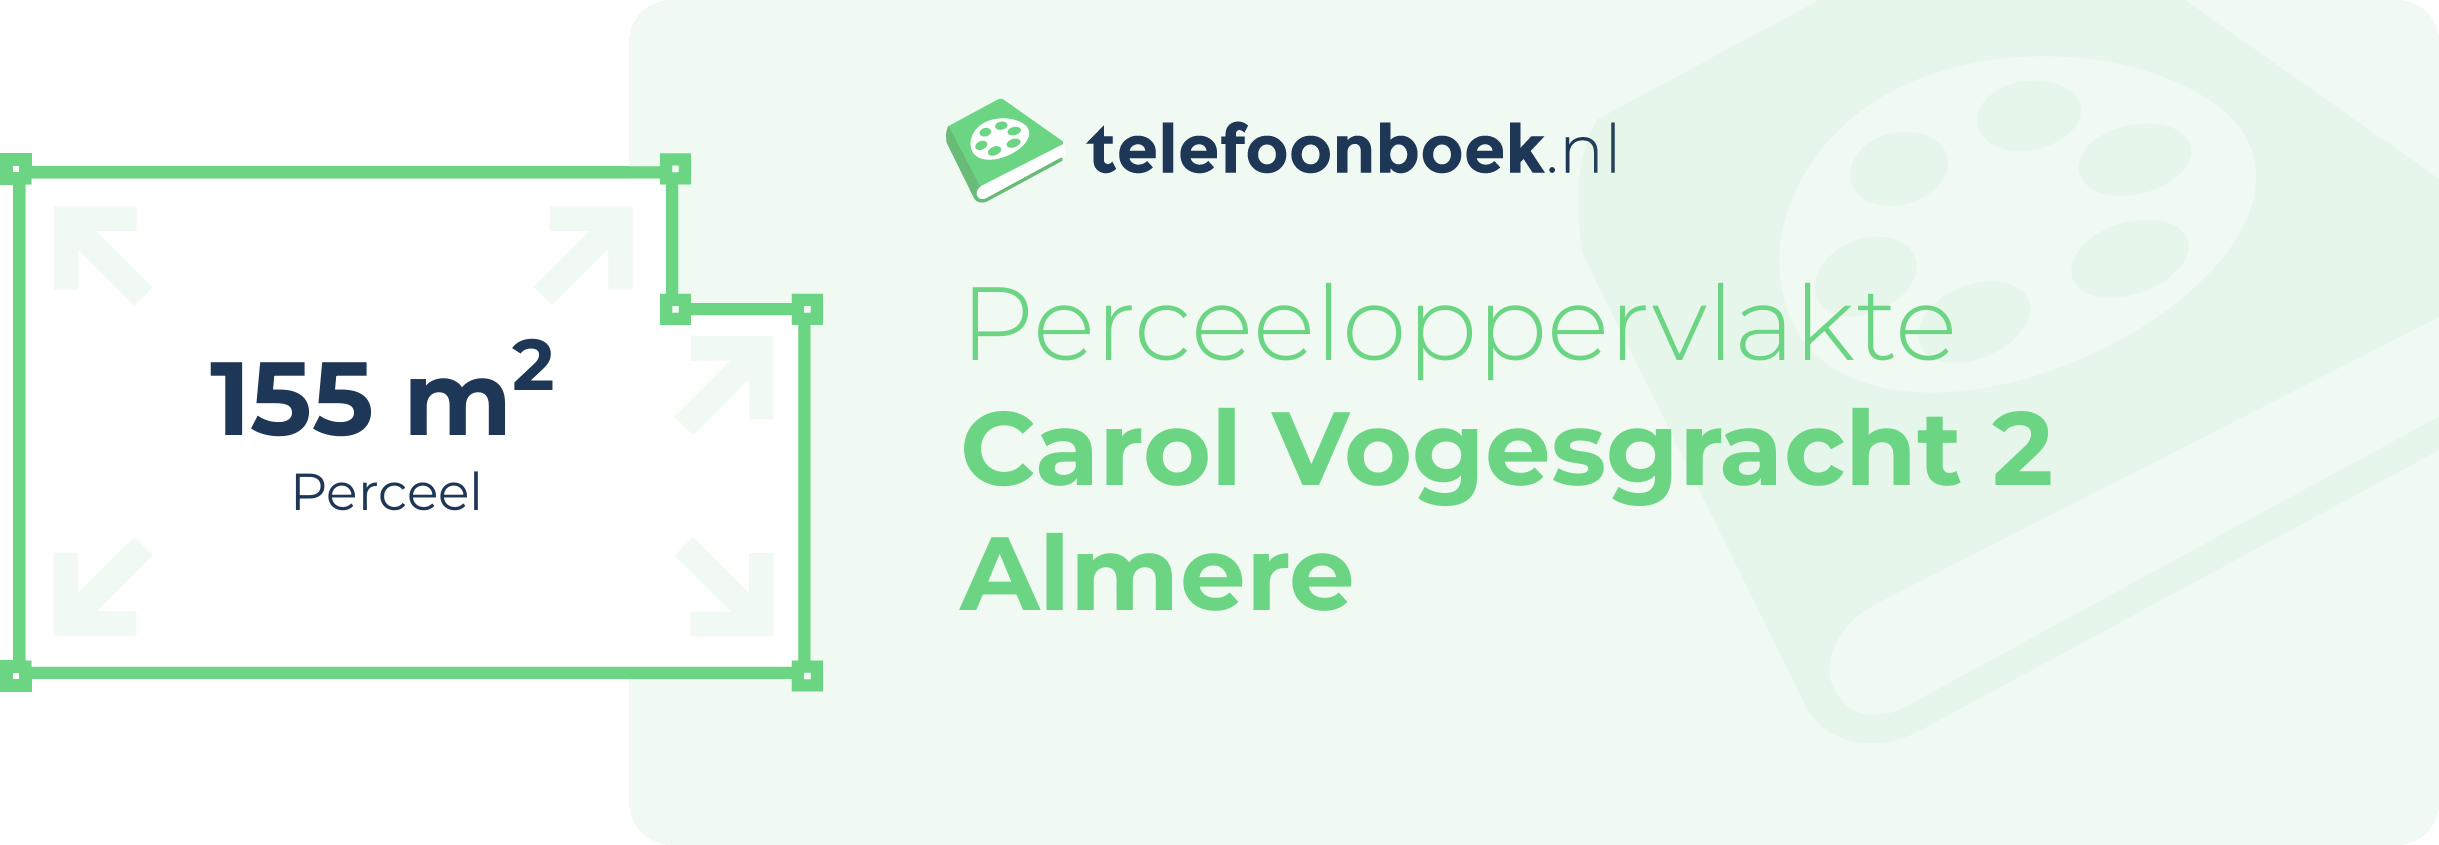 Perceeloppervlakte Carol Vogesgracht 2 Almere